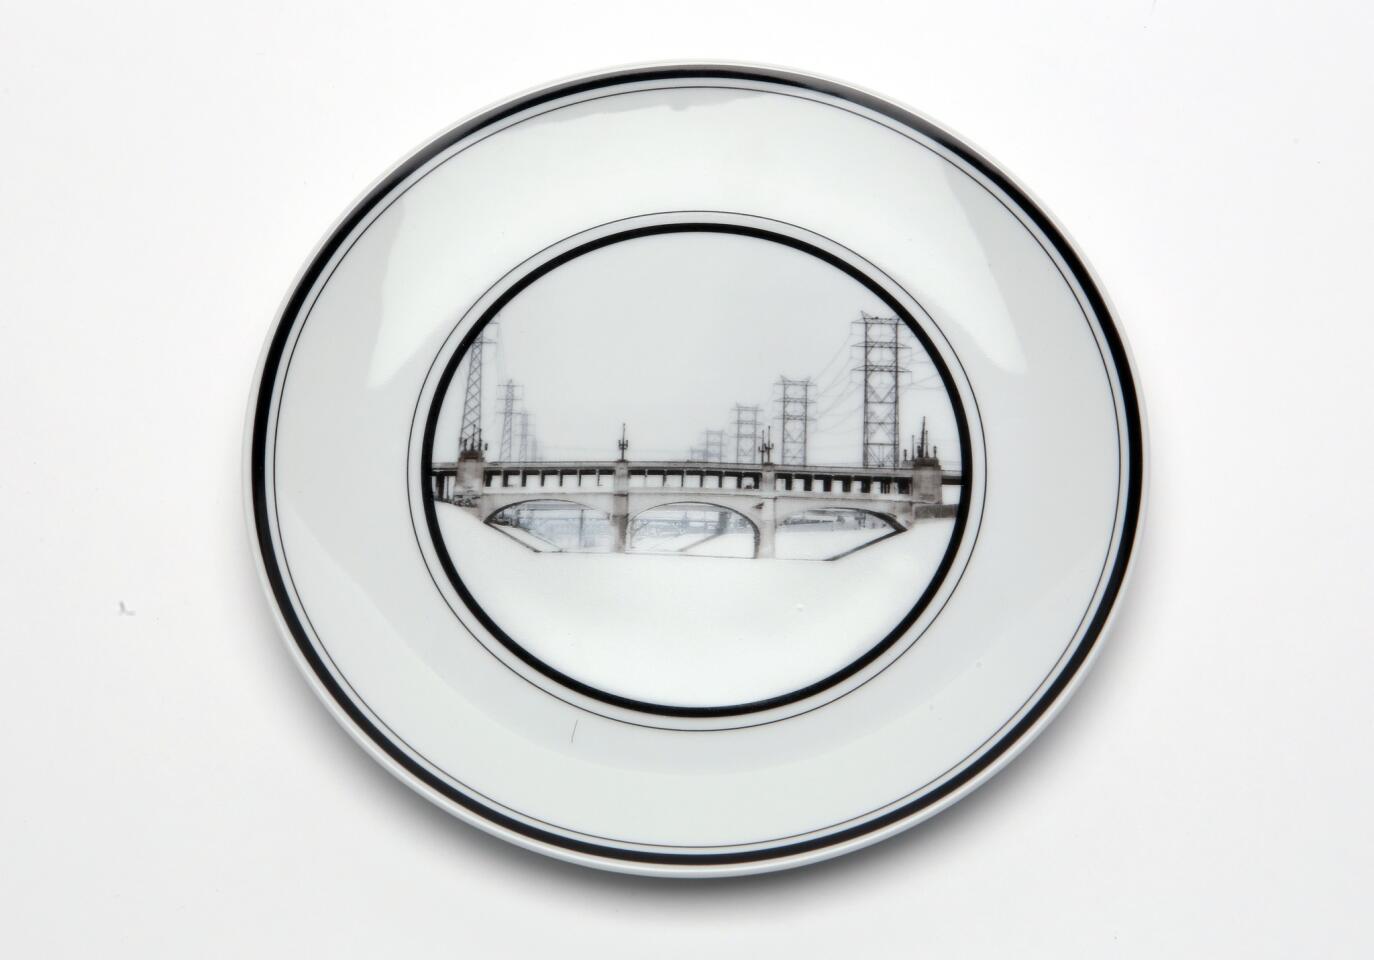 L.A. bridges on plates